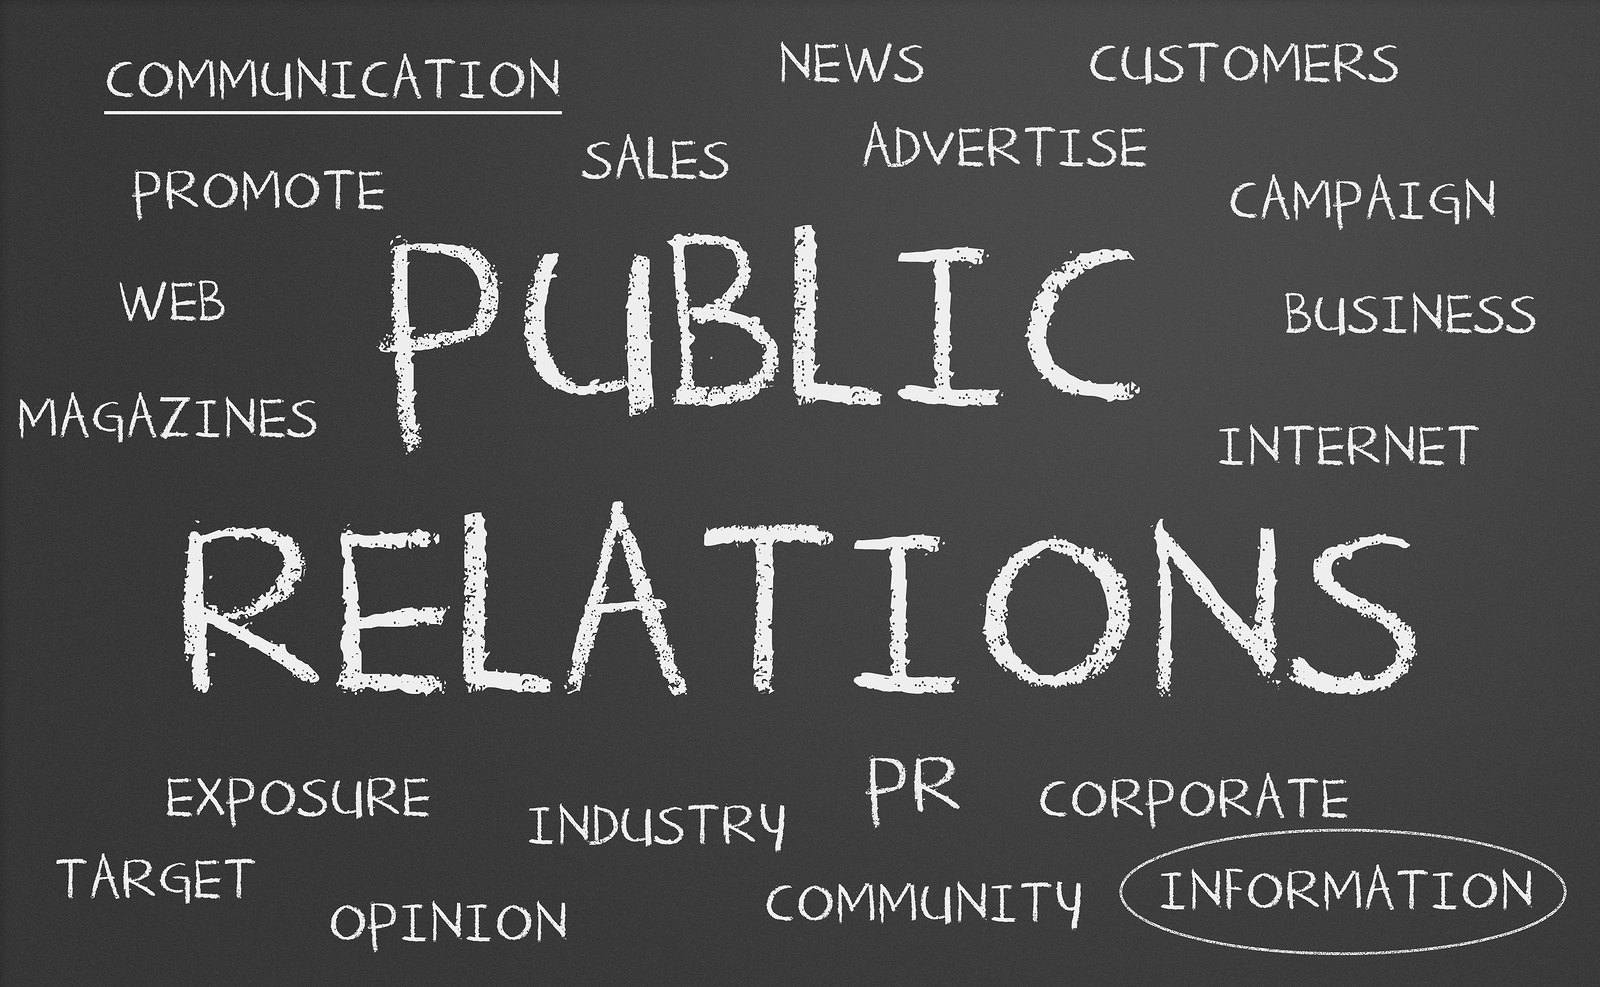 PUBLIC RELATIONS, MEDIA RELATIONS & CORPORATE COMMUNICATION